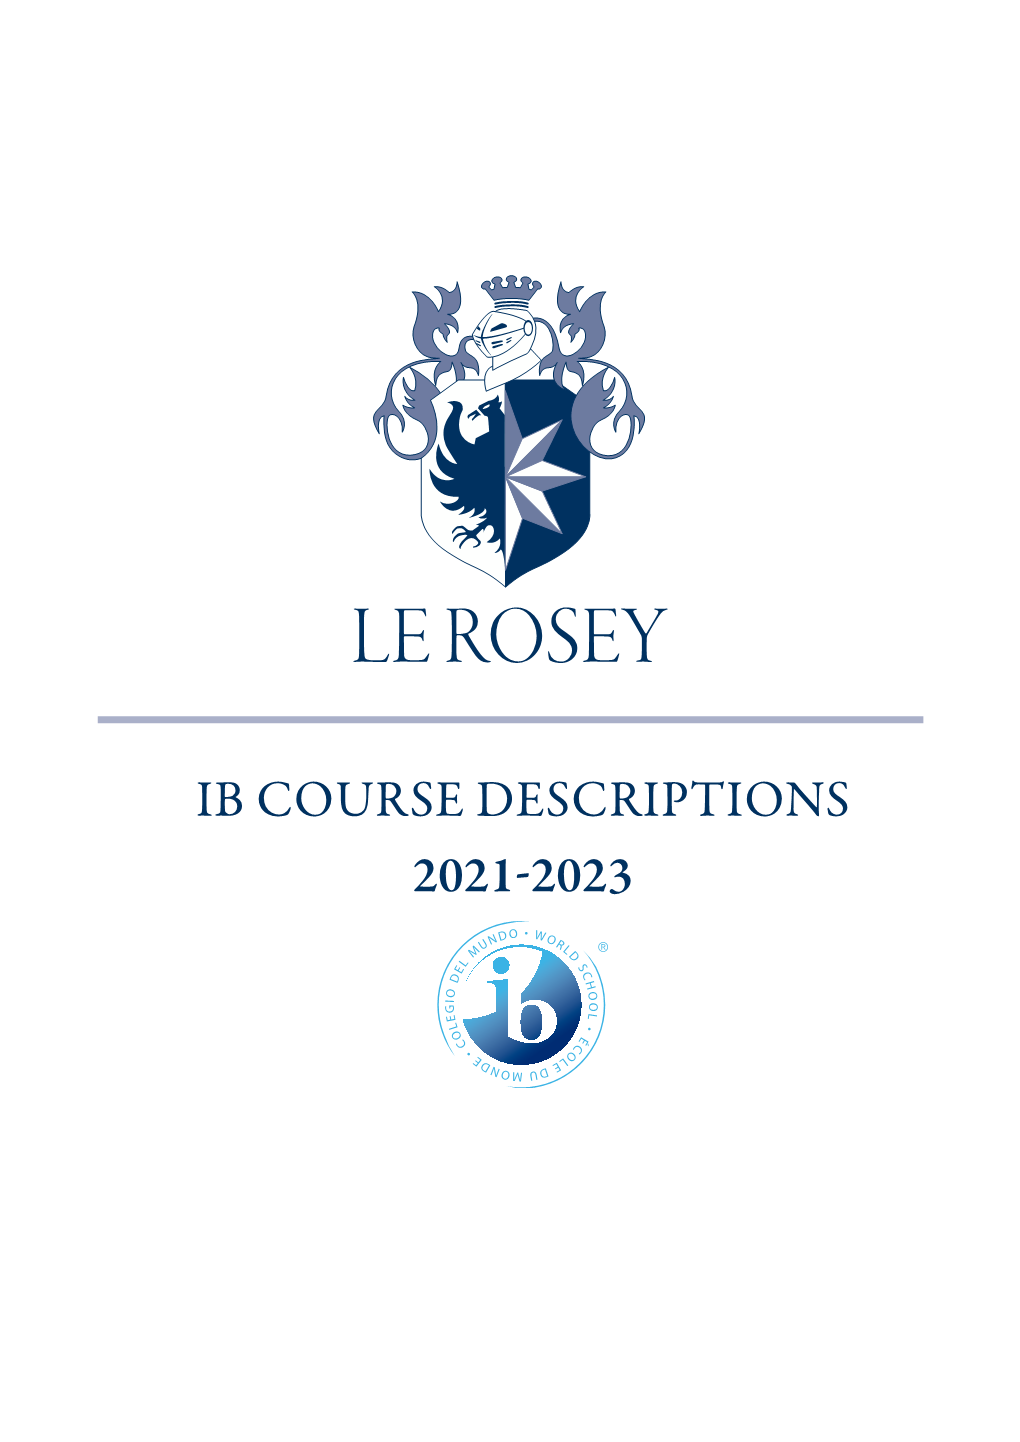 Ib Course Descriptions 2021-2023 the Ib Structure